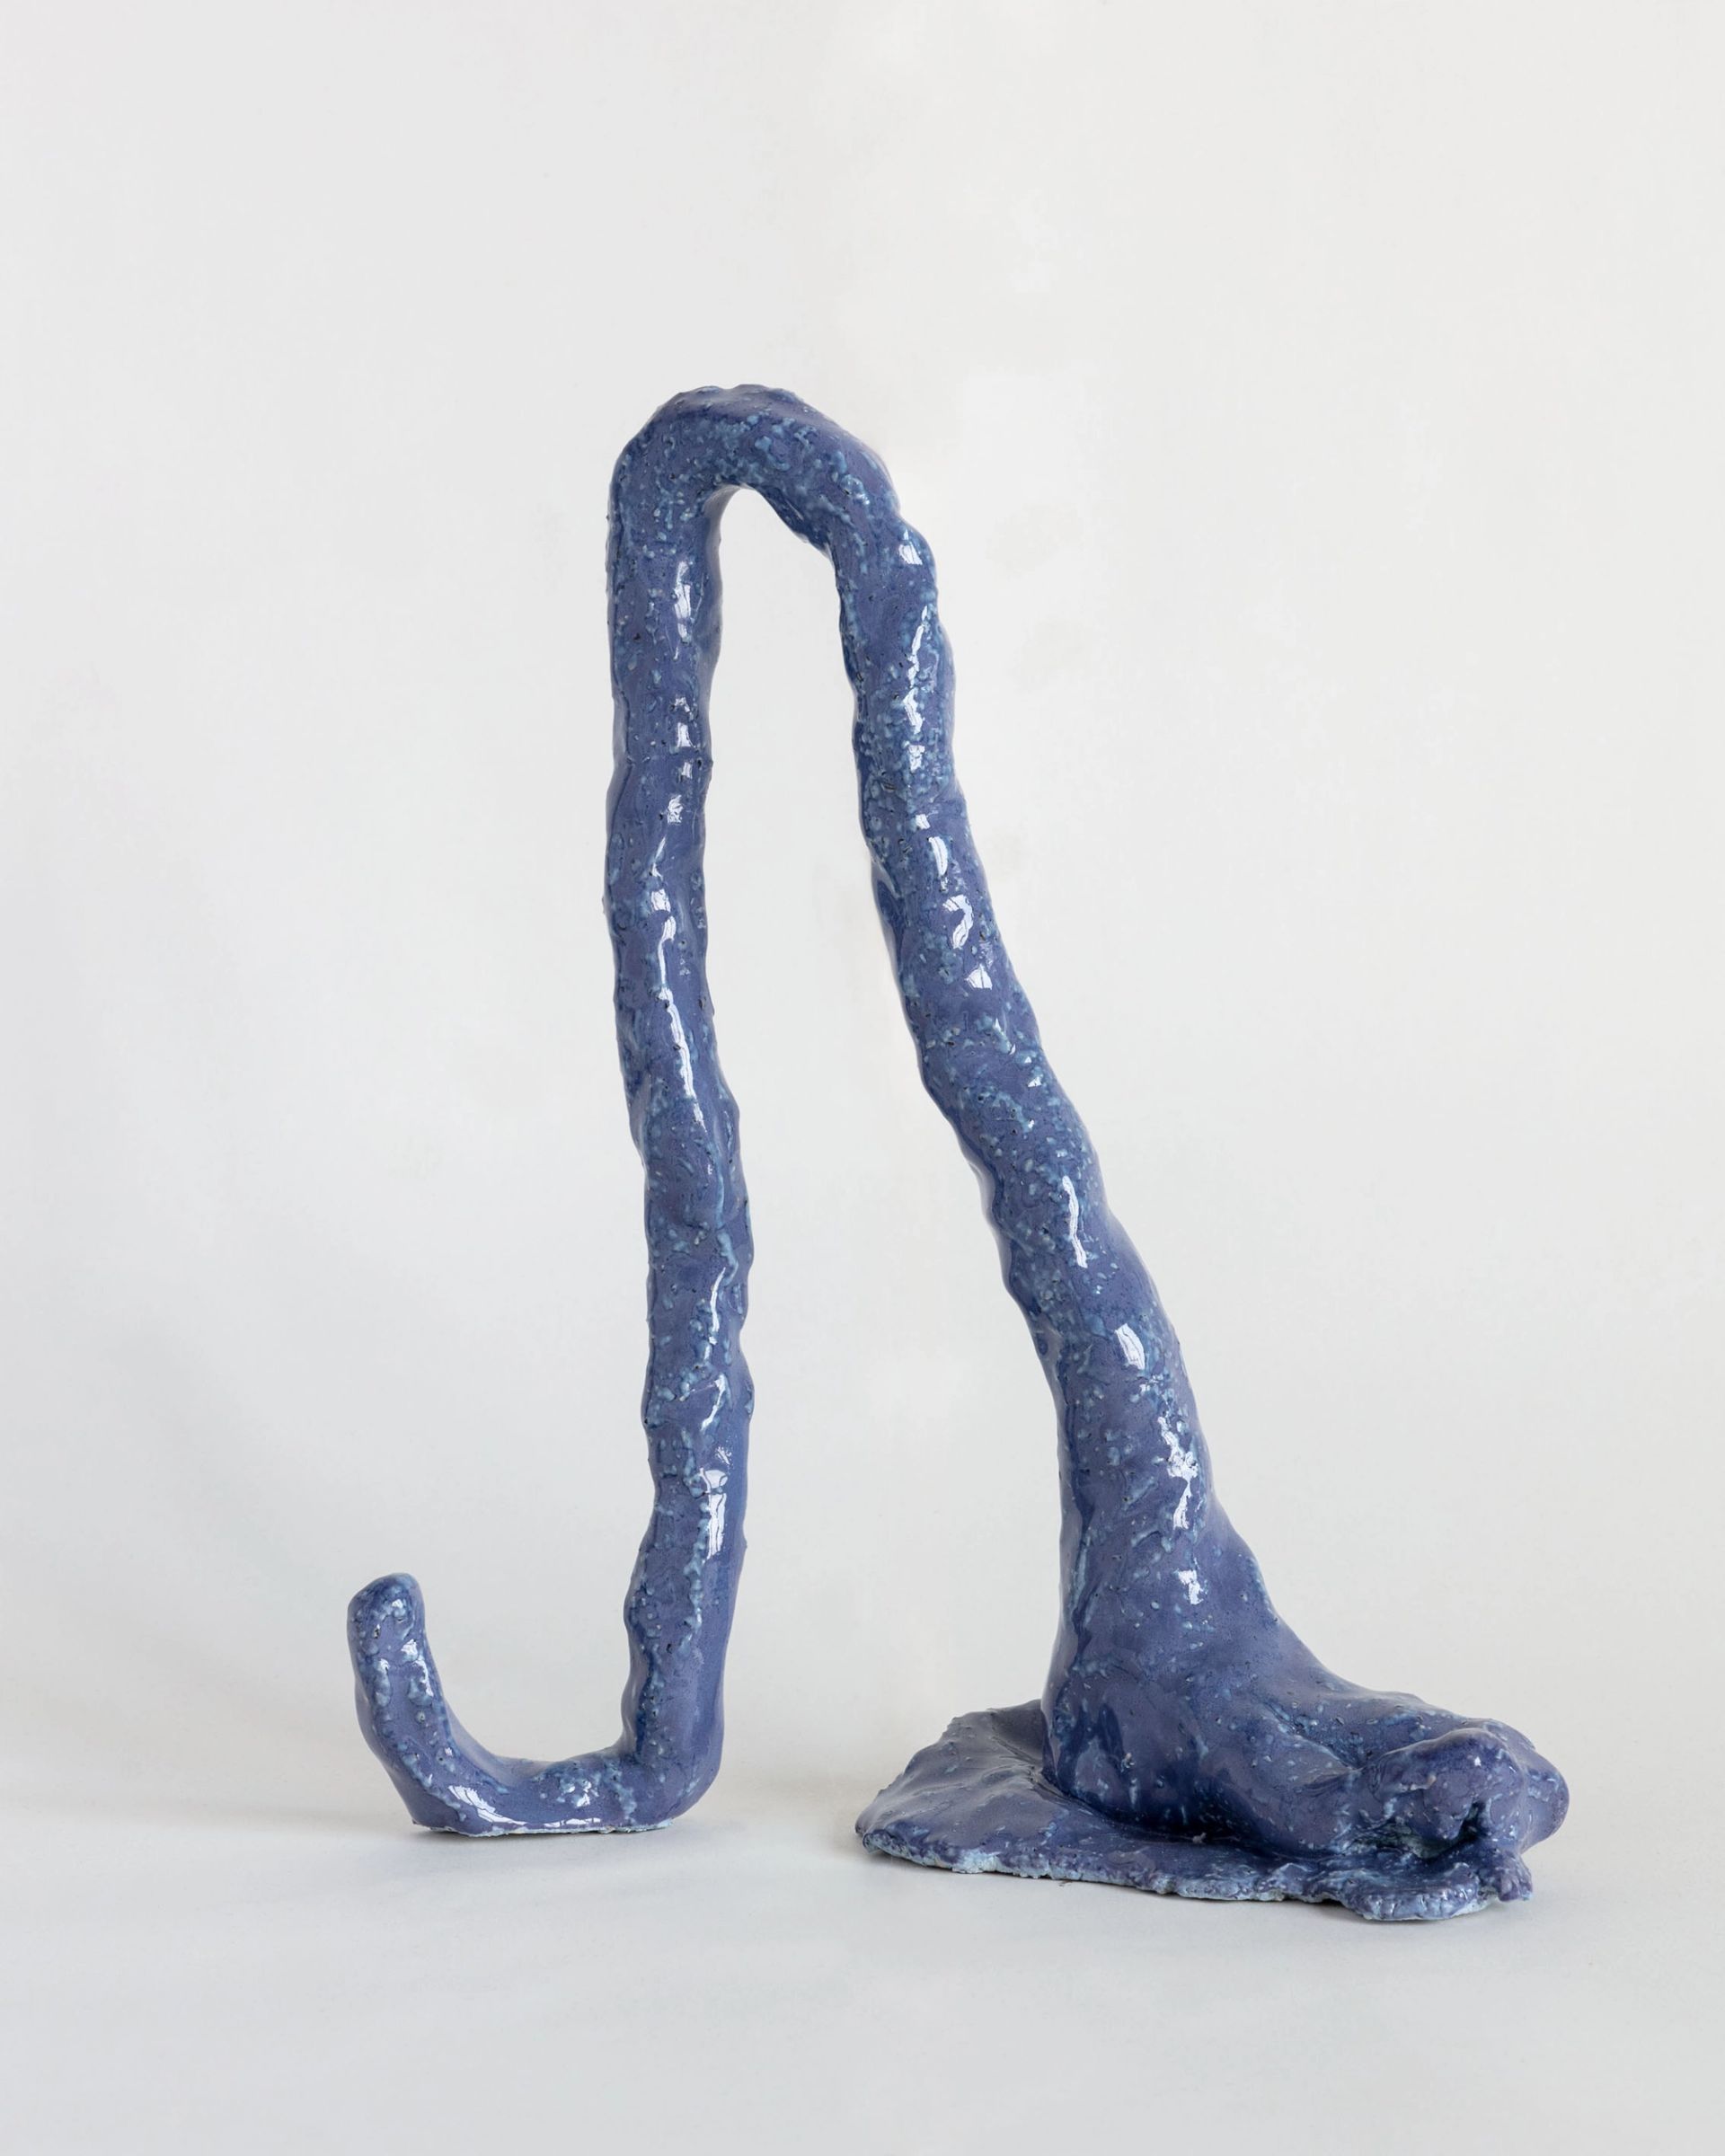 Veronika Hilger, Untitled, 2018, ceramic, glazed, 27 × 21 × 10 cm